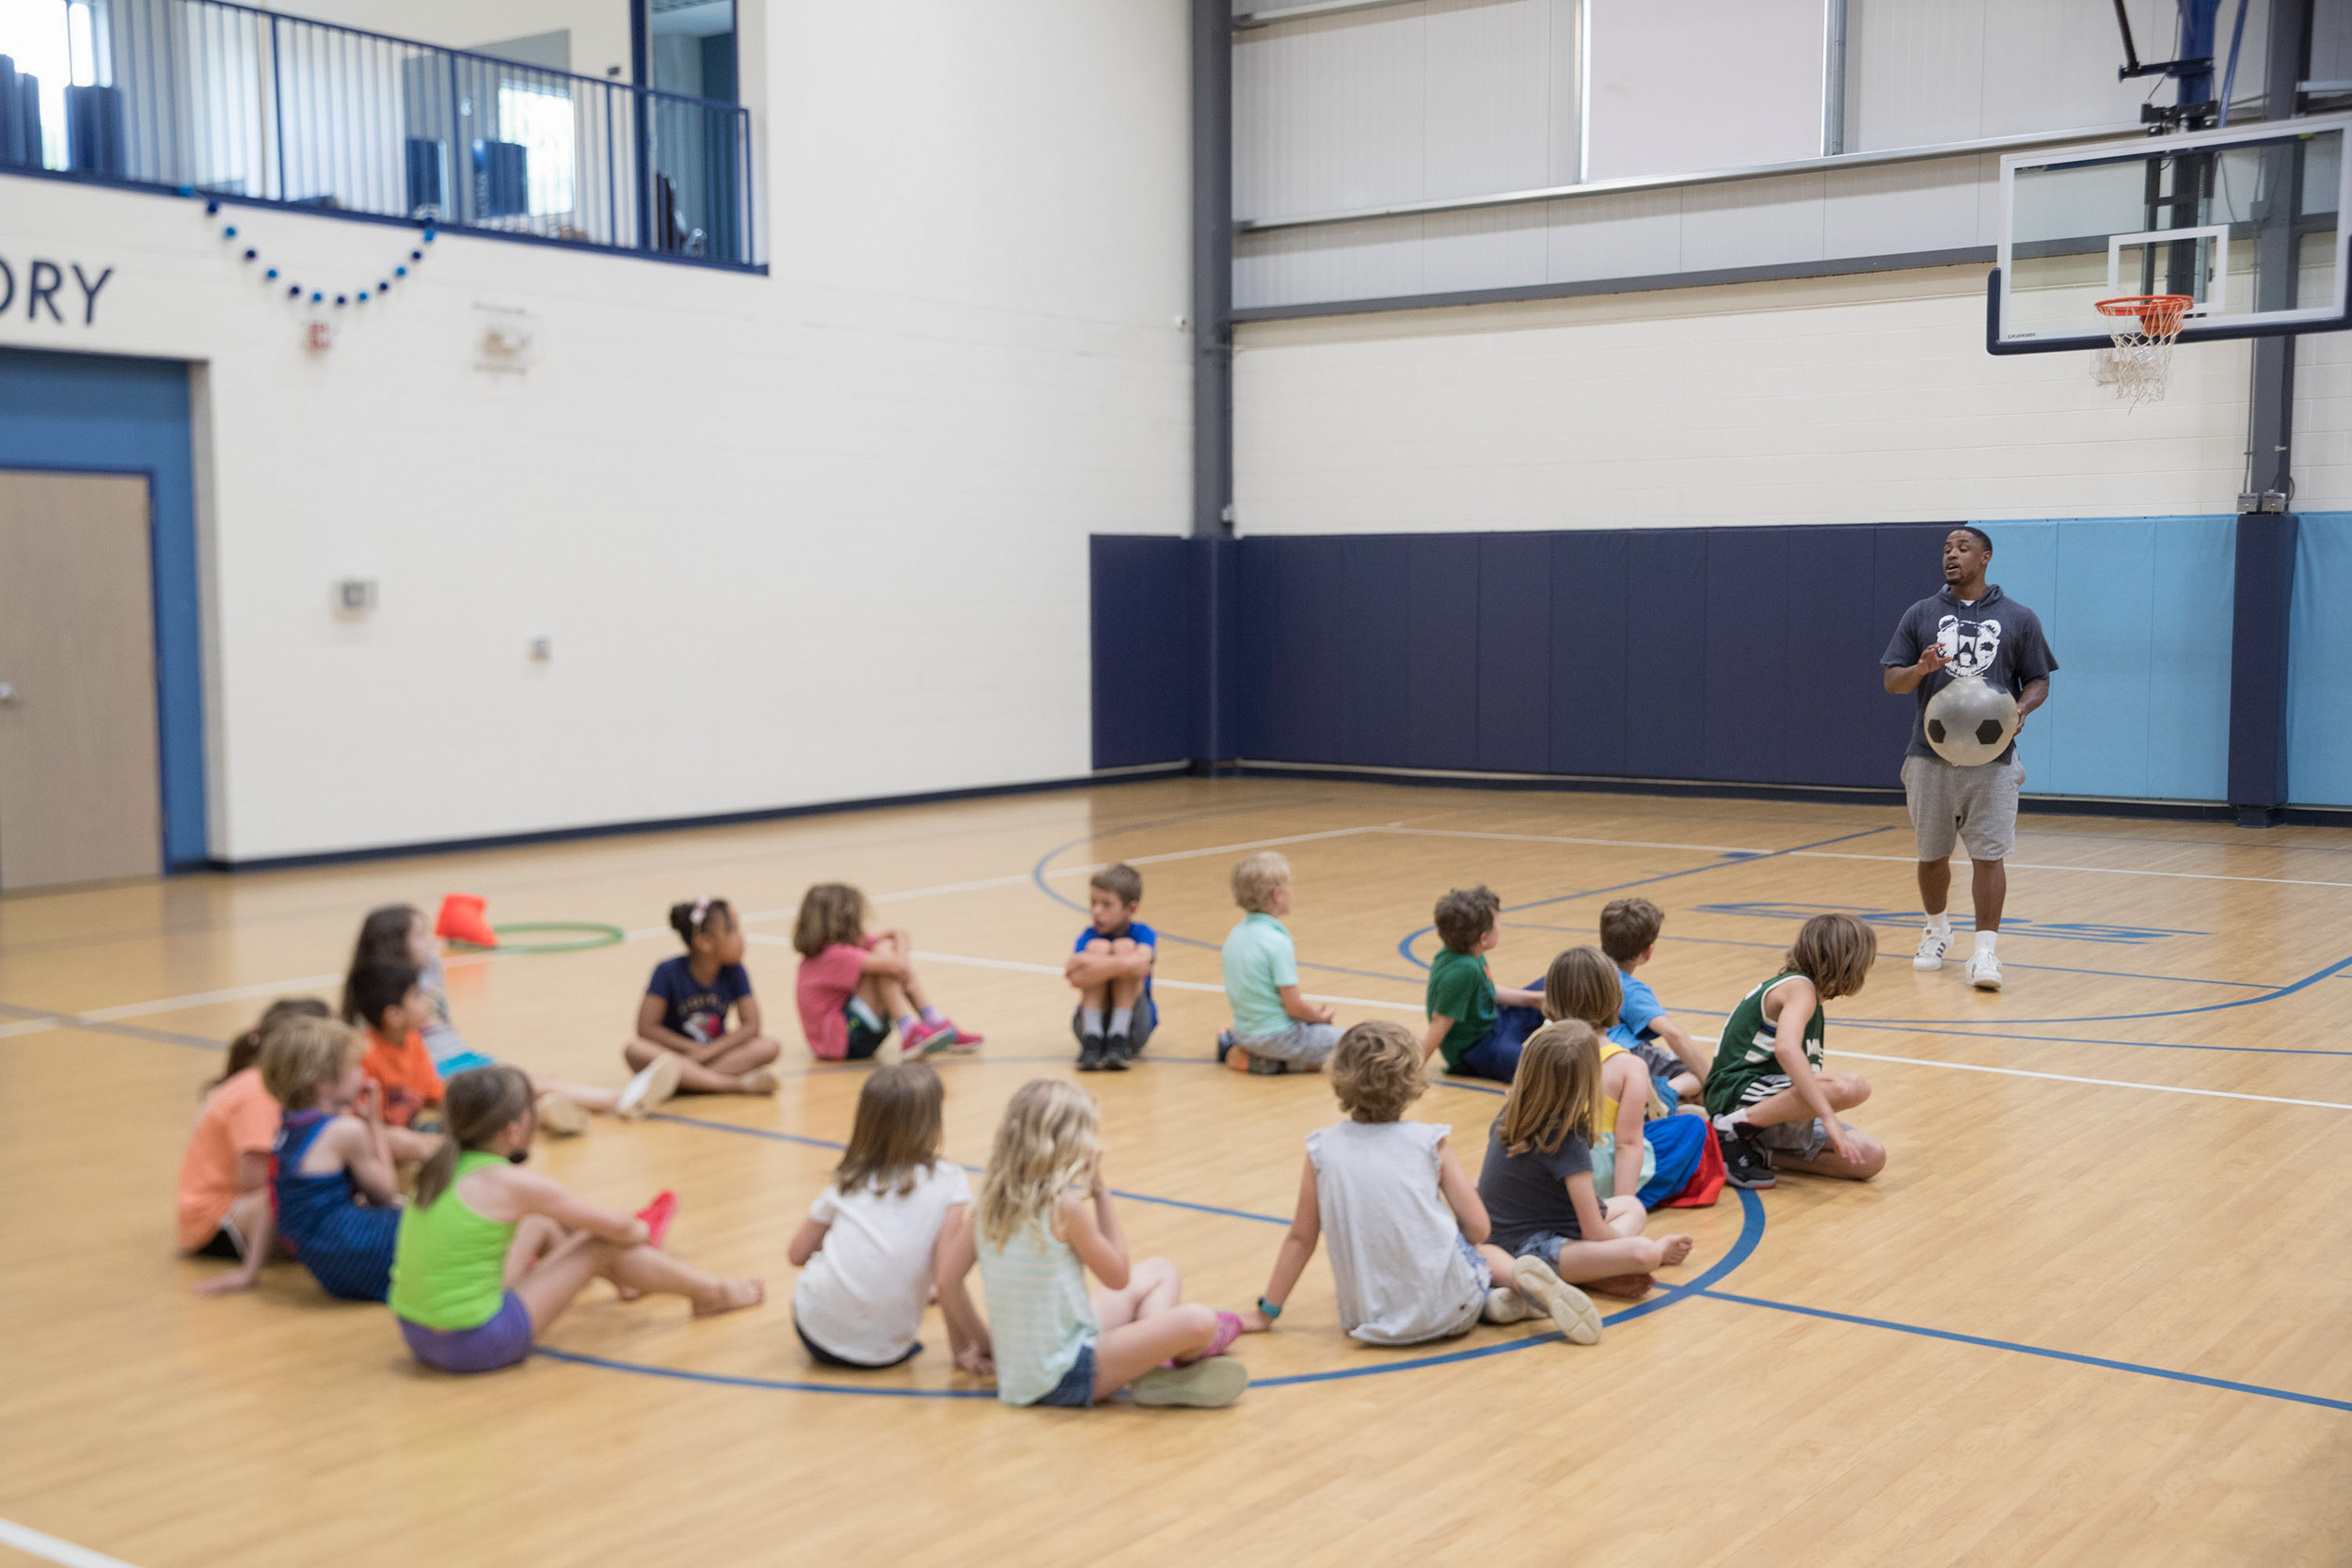 Jontel Evans talking to children on a basketball court